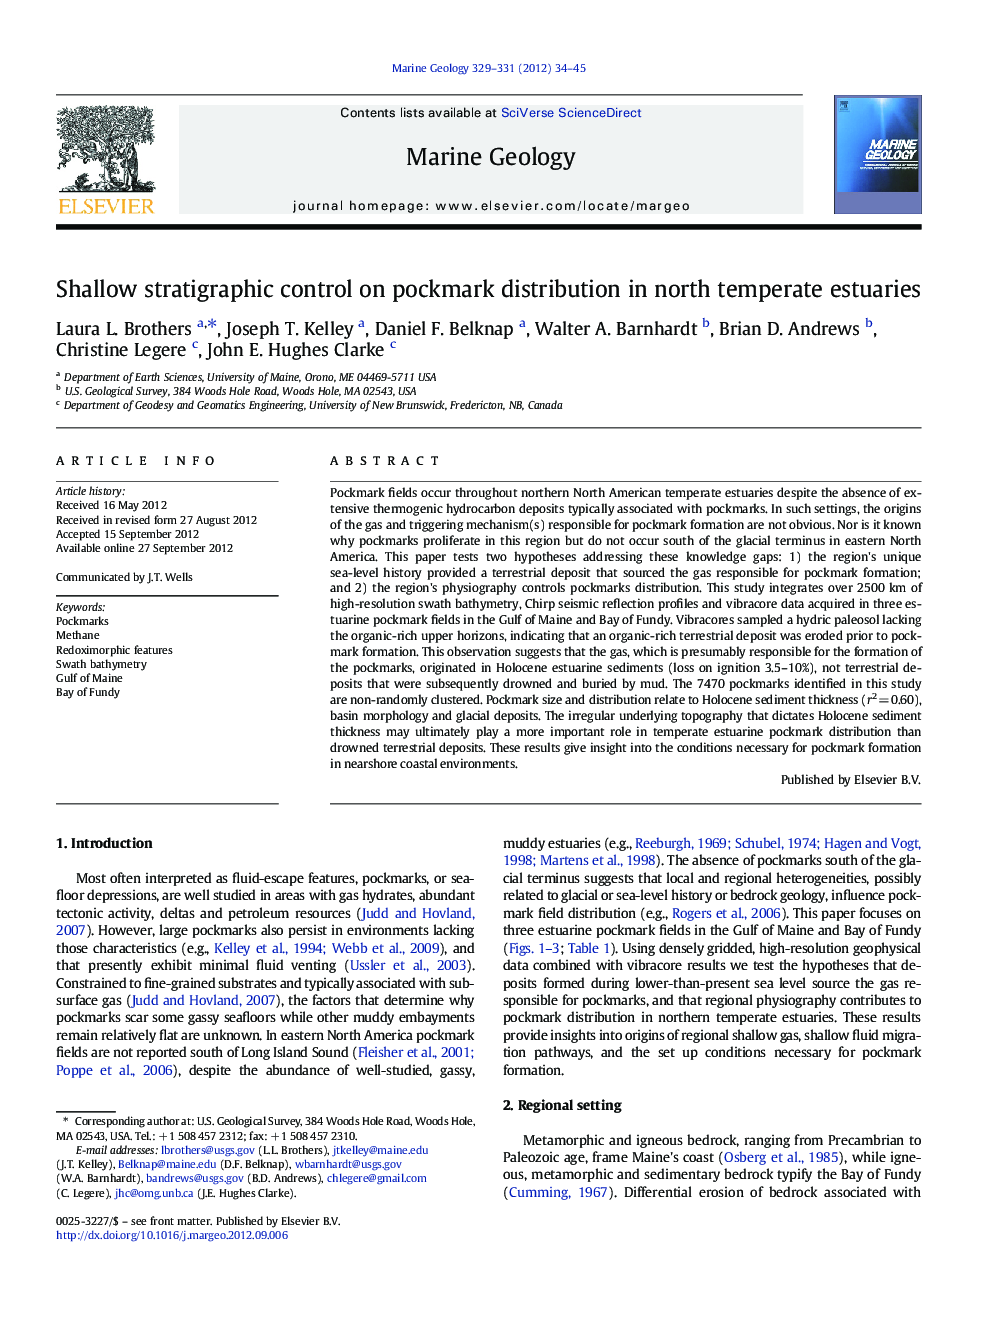 Shallow stratigraphic control on pockmark distribution in north temperate estuaries